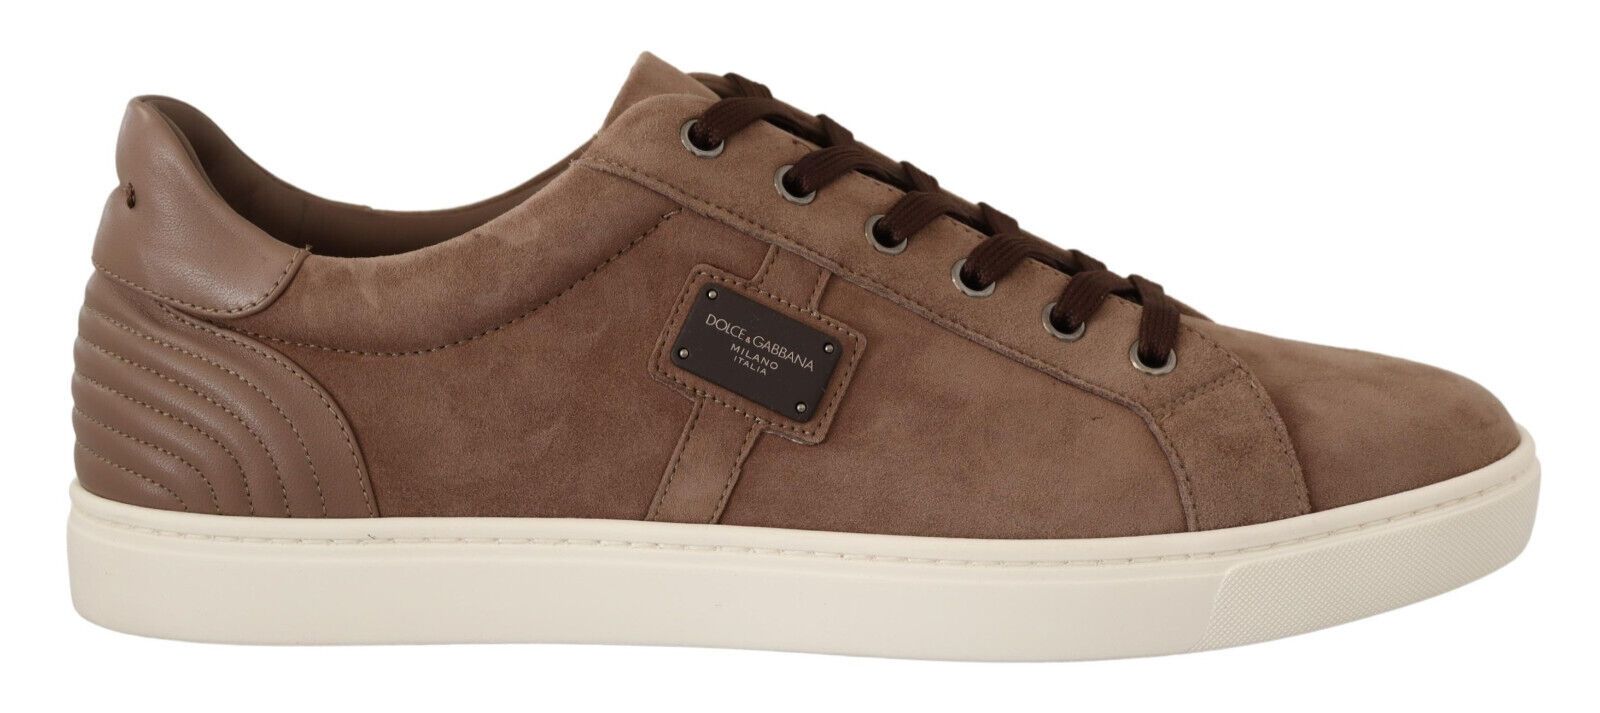 Elegant Brown Leather Sneakers for Men